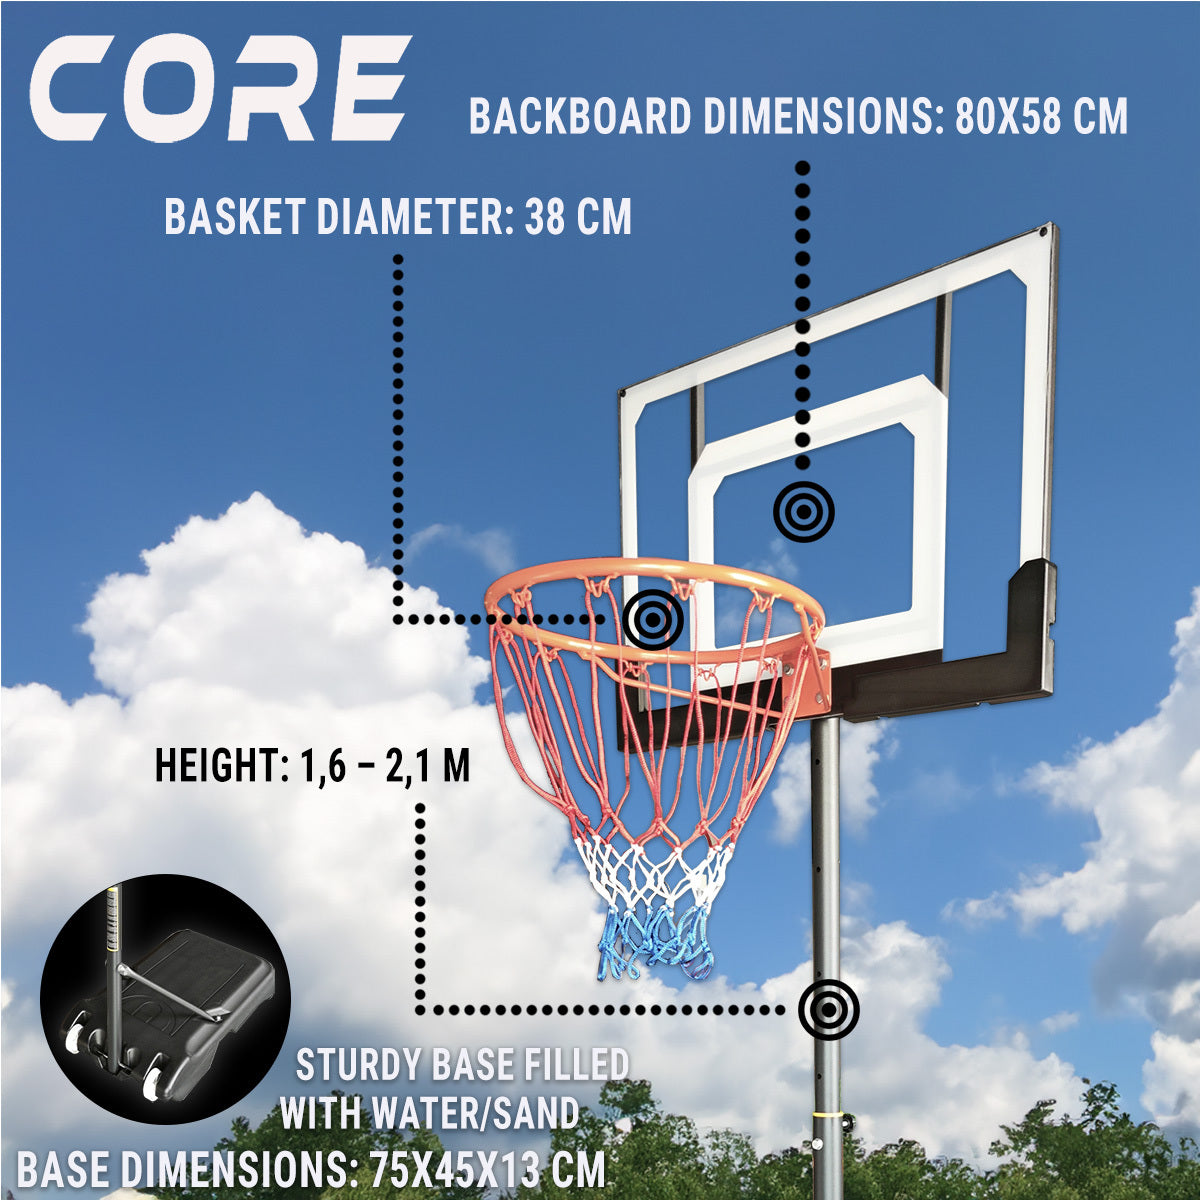 Core Basketballkorb Kinder 1,6-2,1m - 249,00 EUR - Nordic ProStore